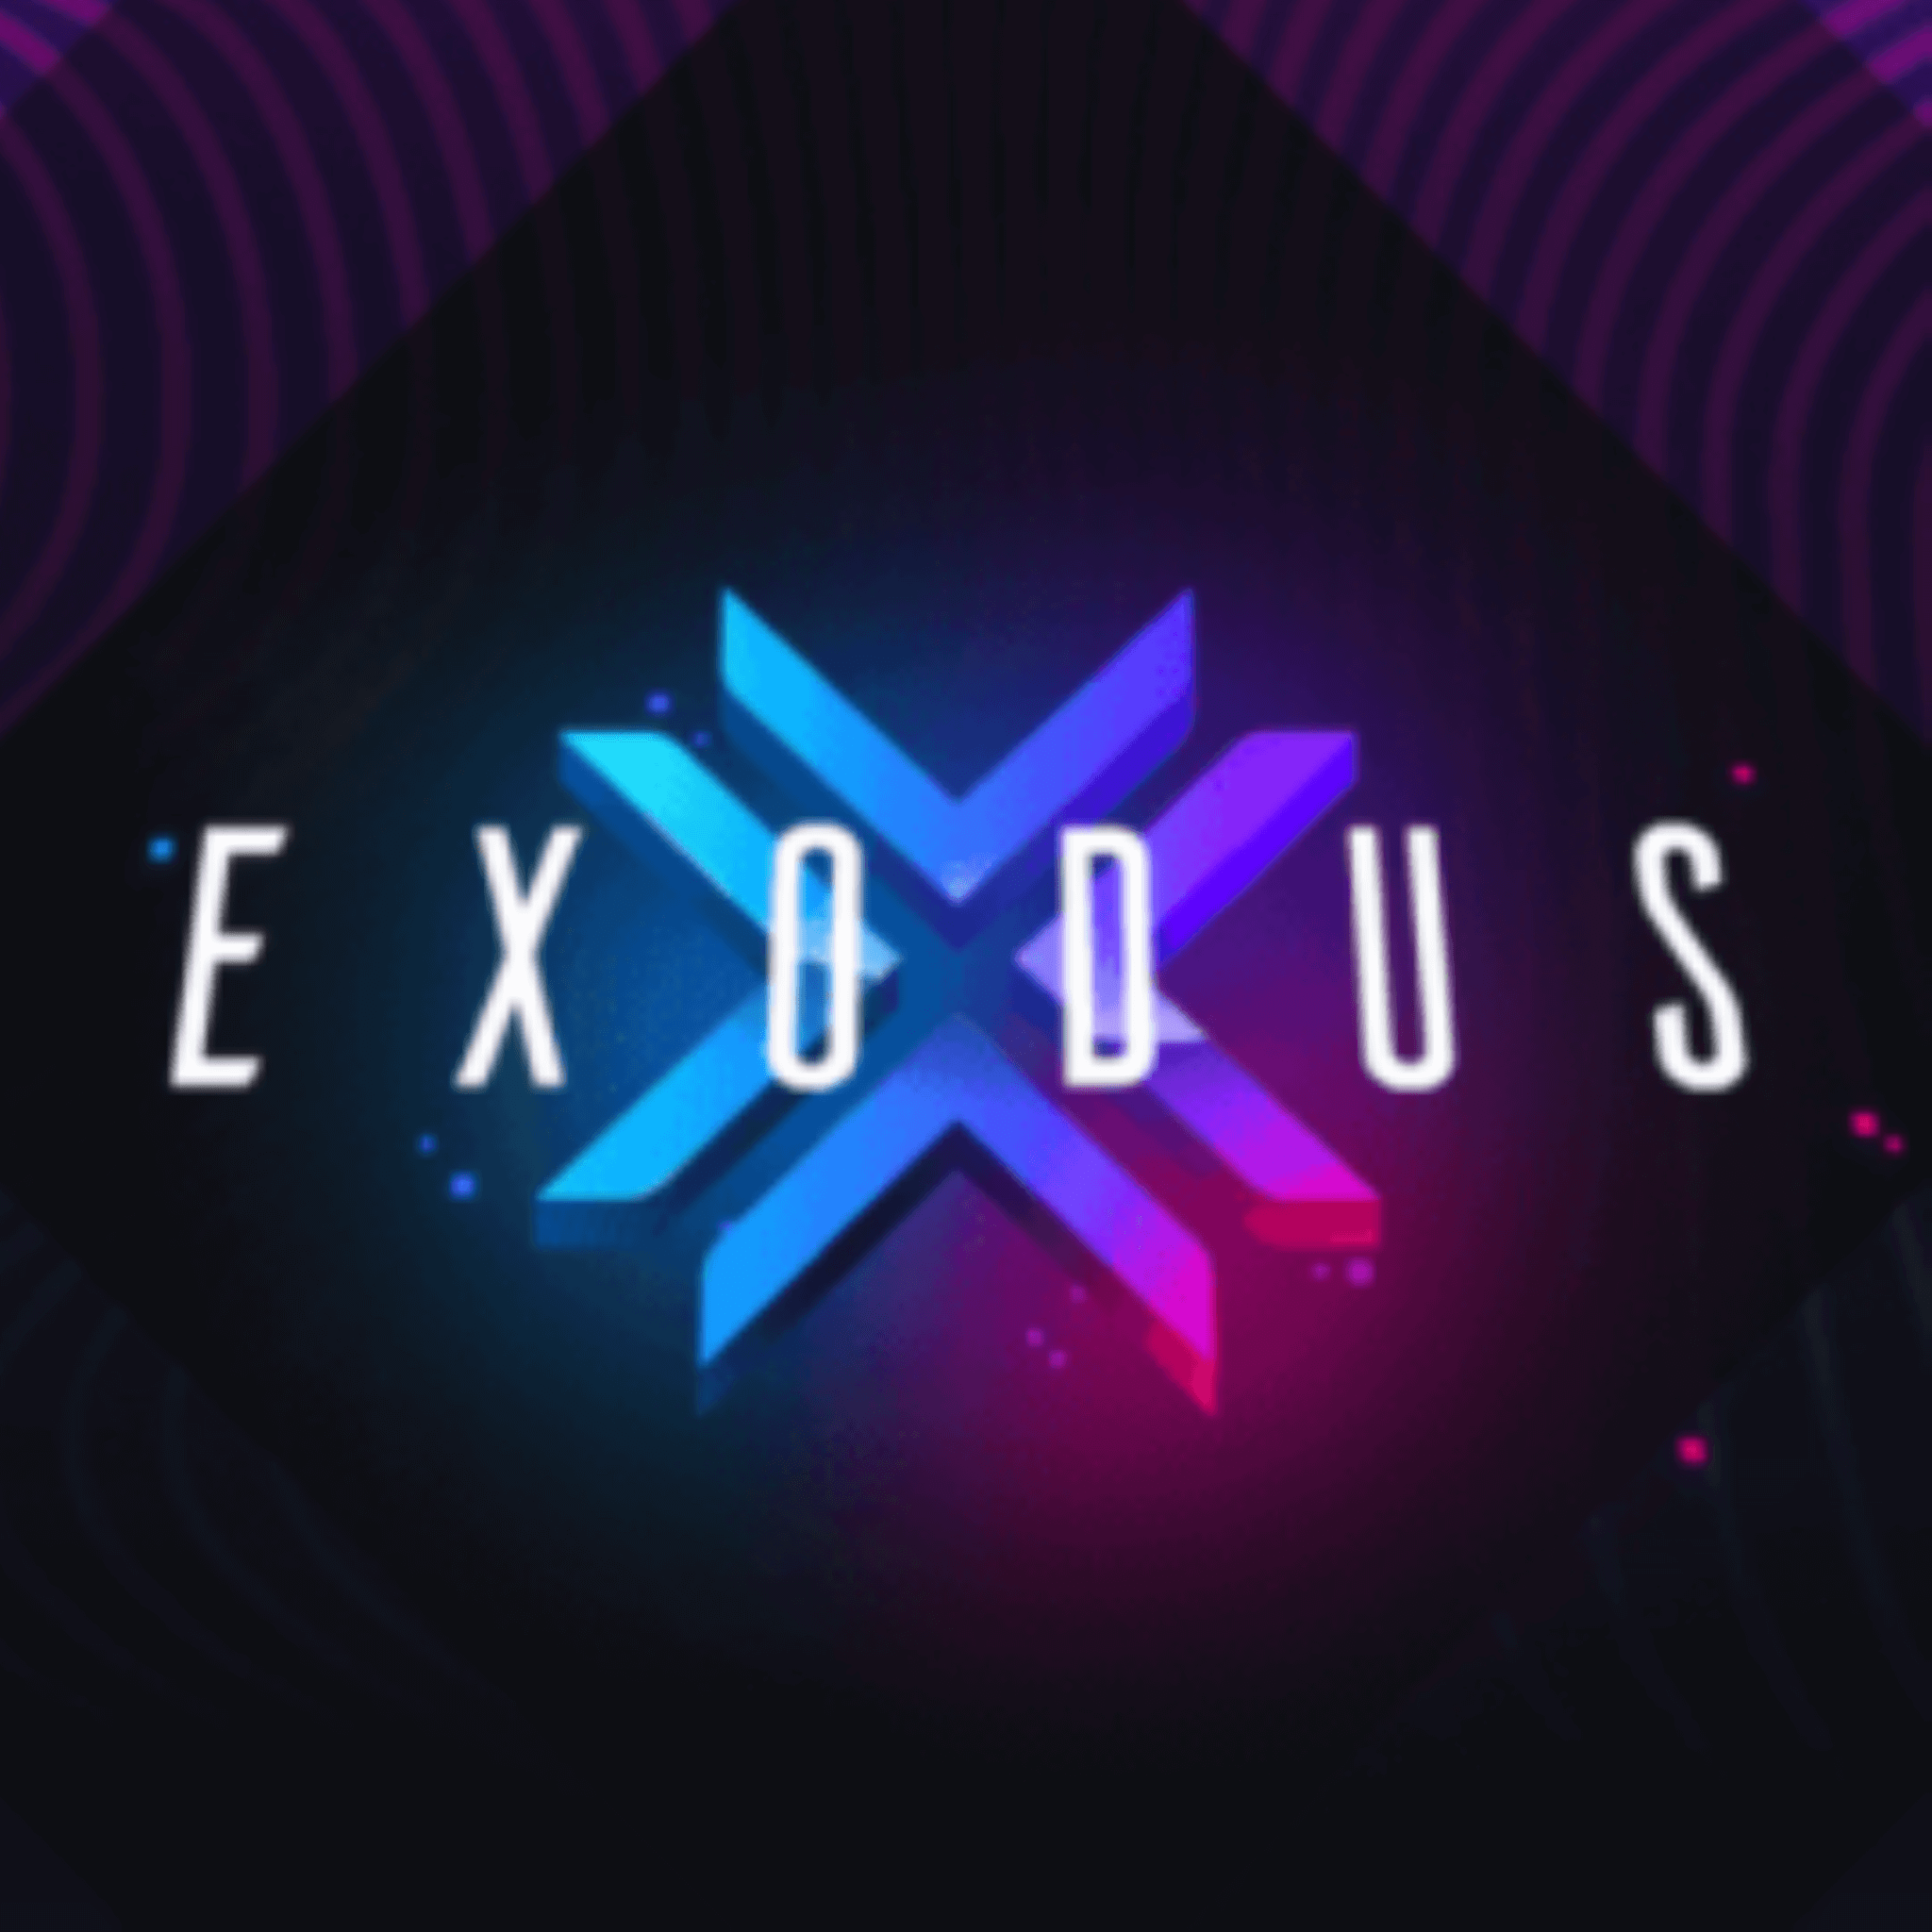 Exodus logo crypto currency crypto advertising agency